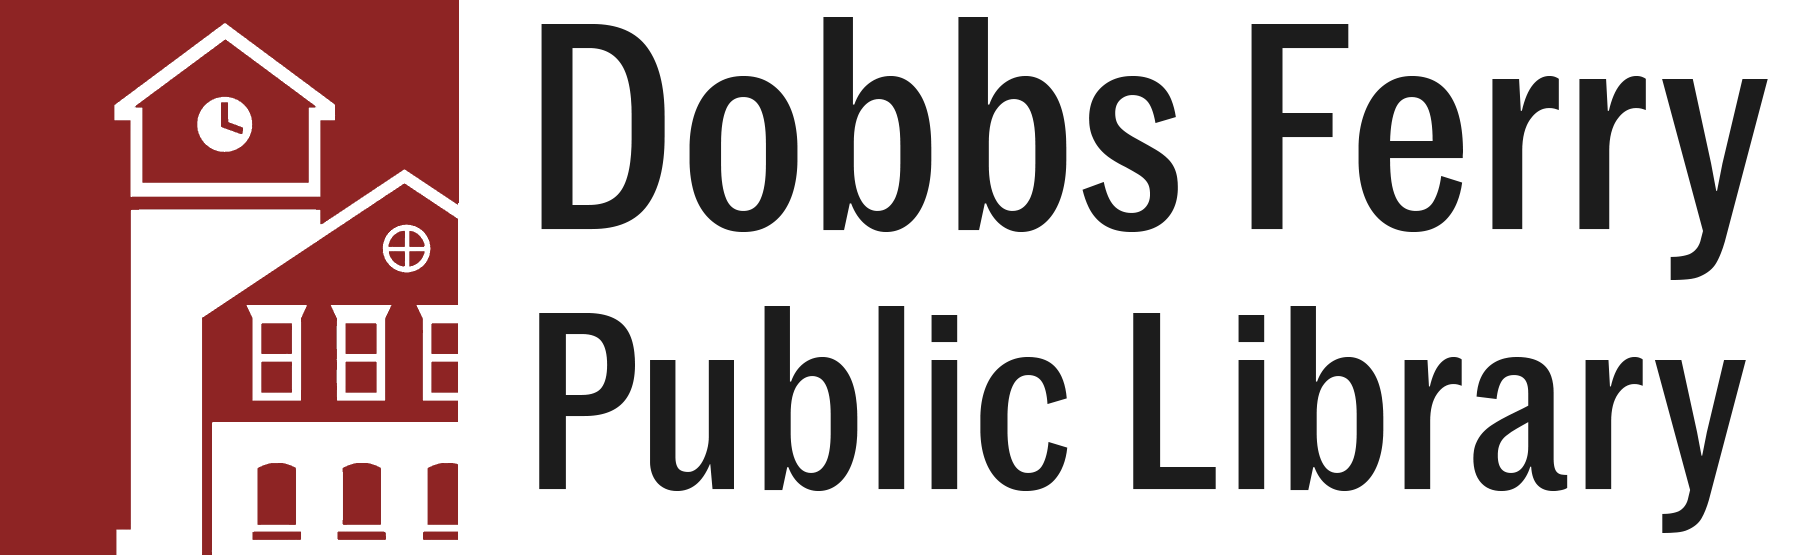 Dobbs Ferry Library